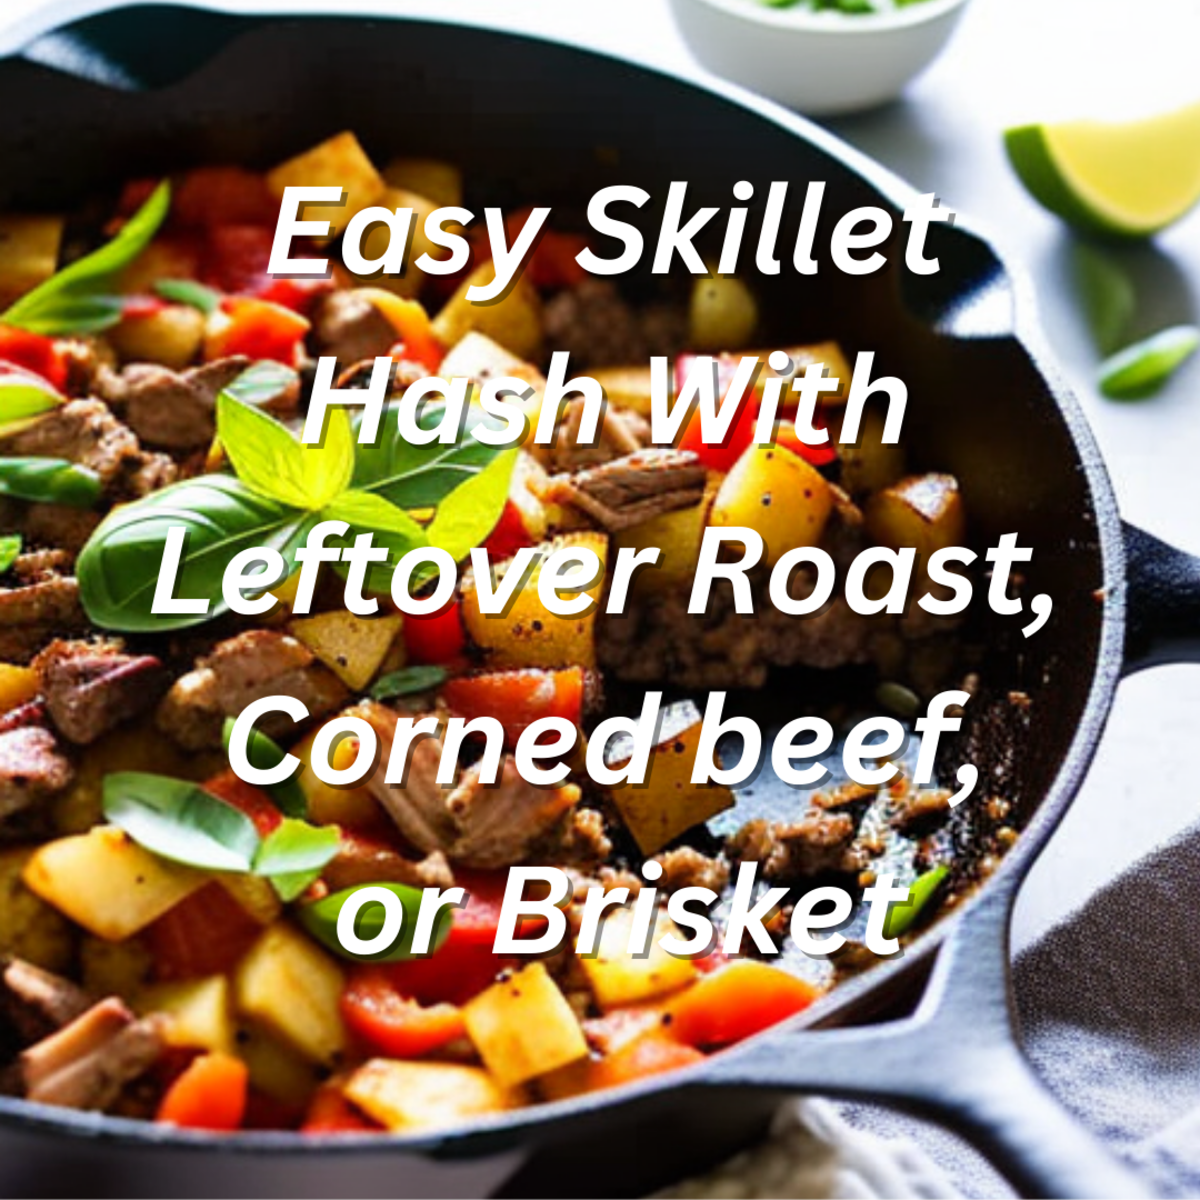 Easy Skillet Hash With Leftover Roast, Corned Beef, or Brisket